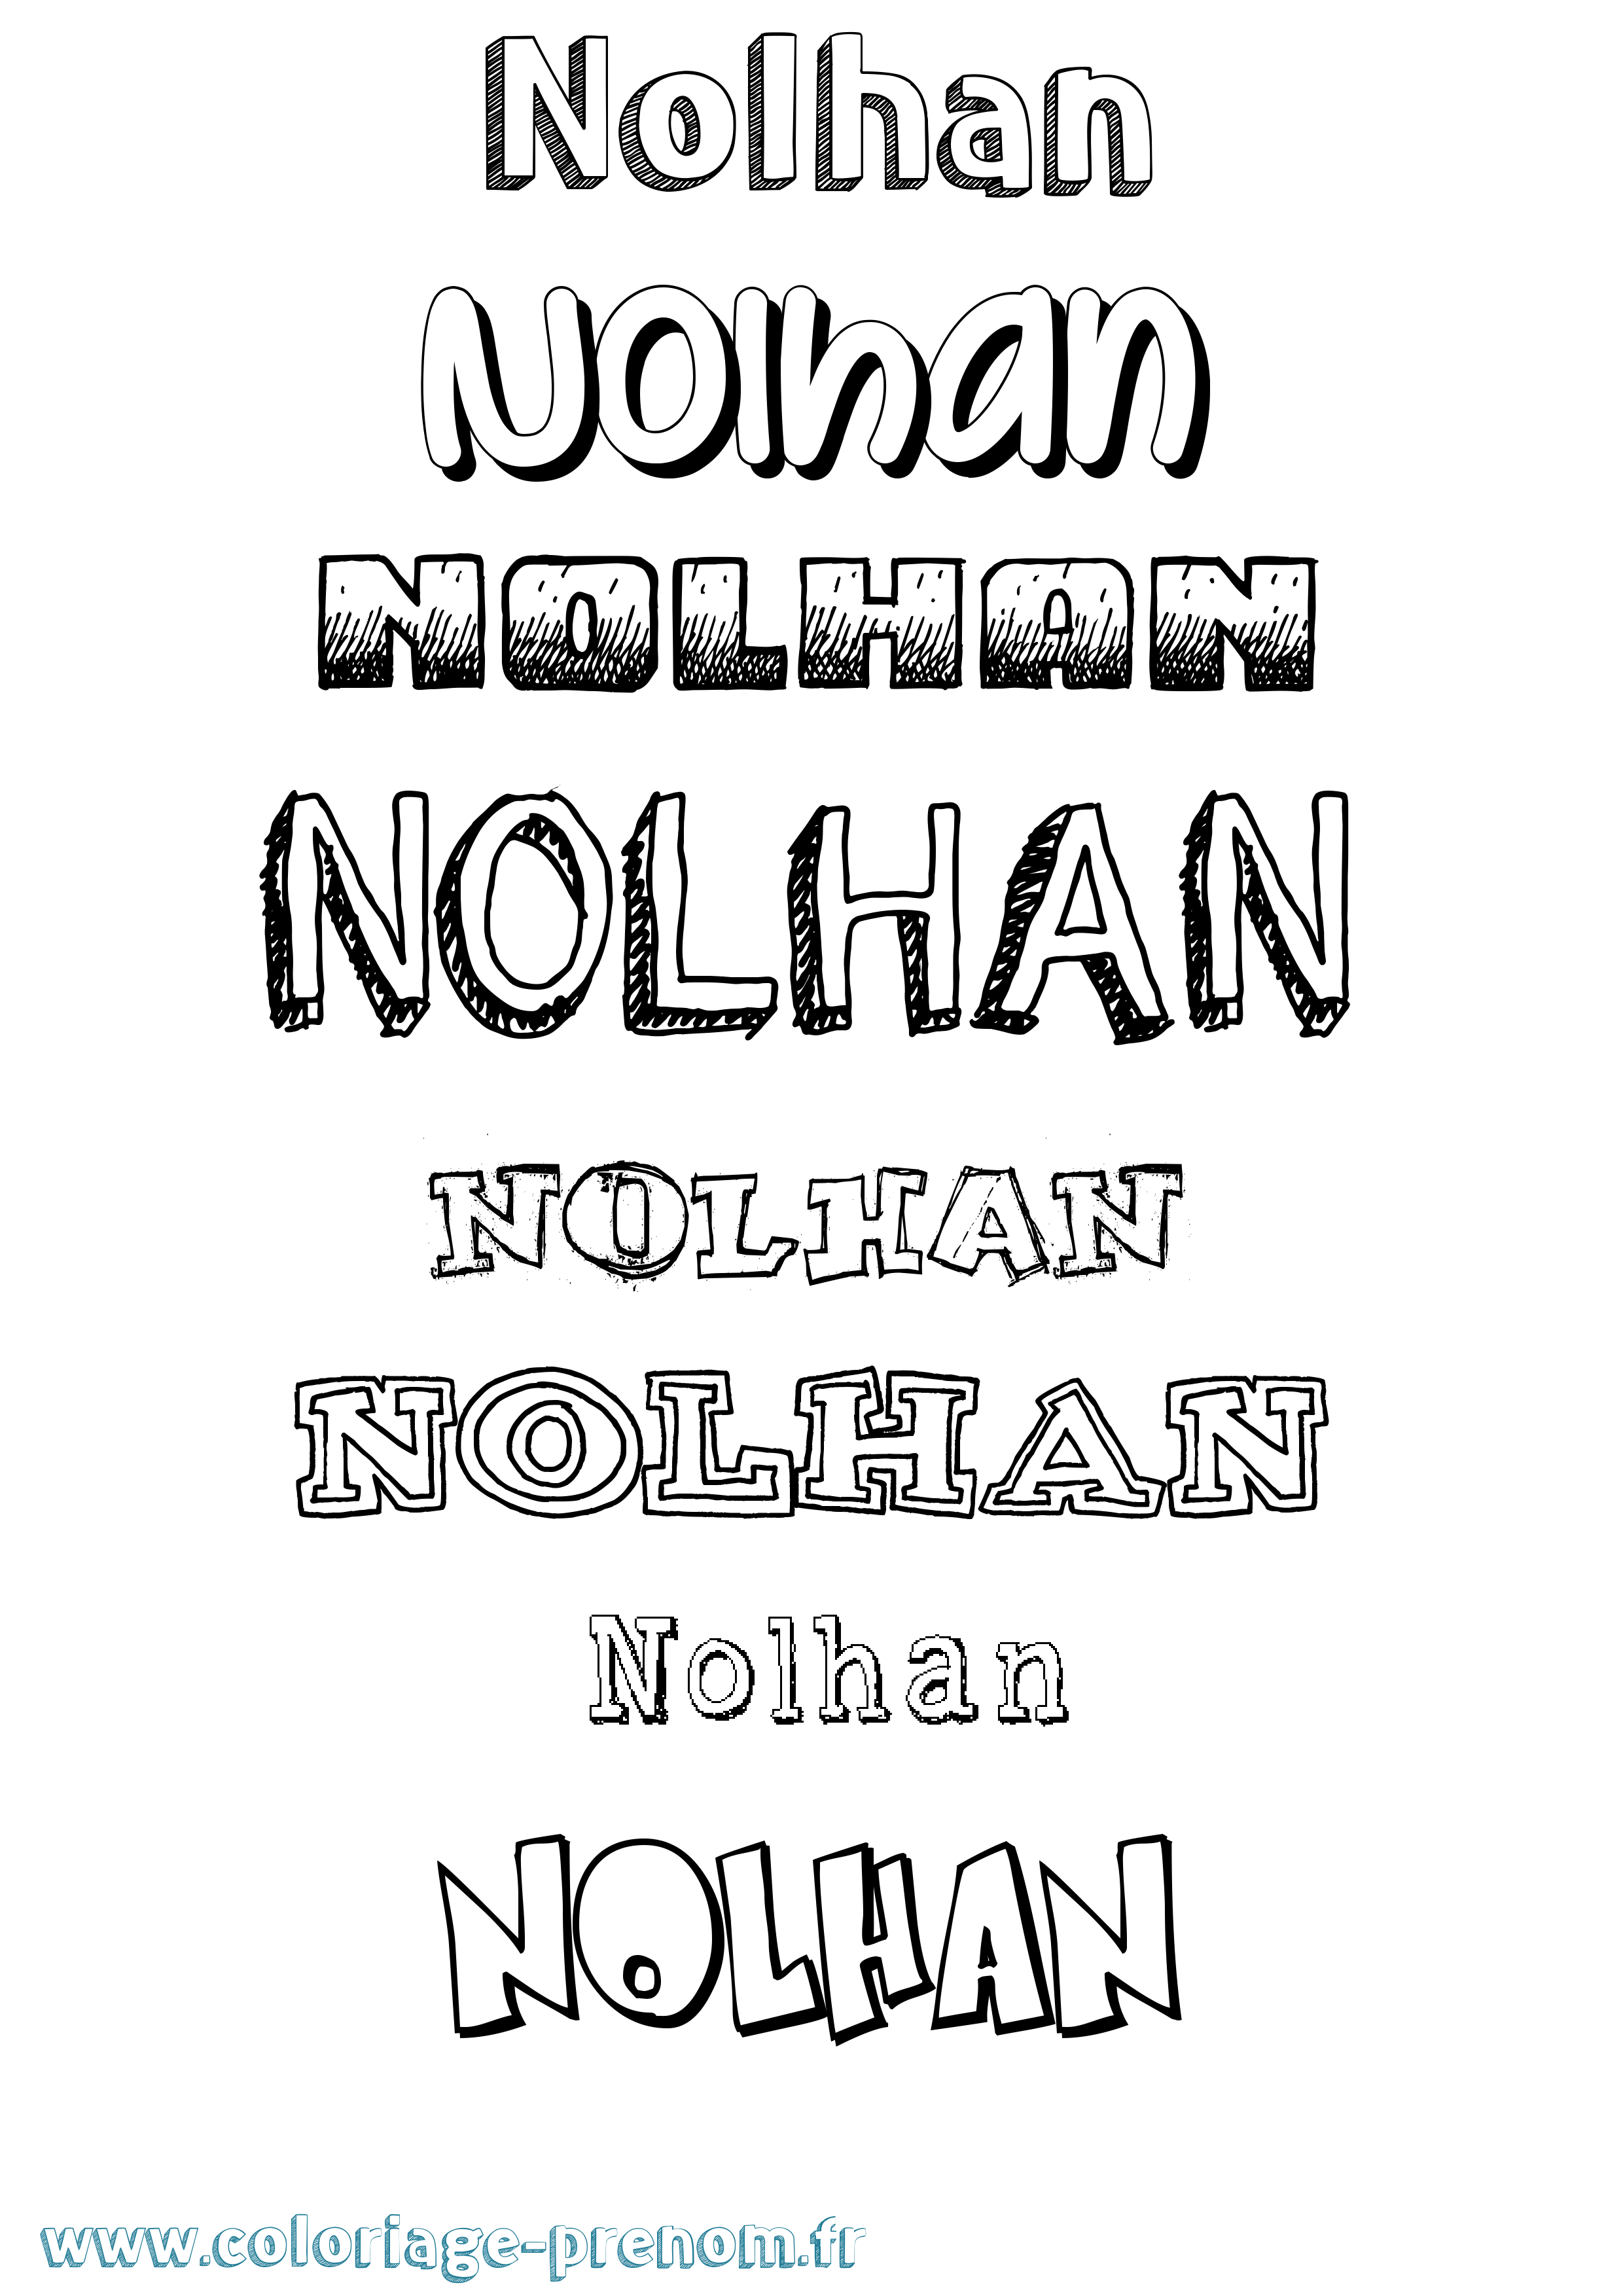 Coloriage prénom Nolhan Dessiné